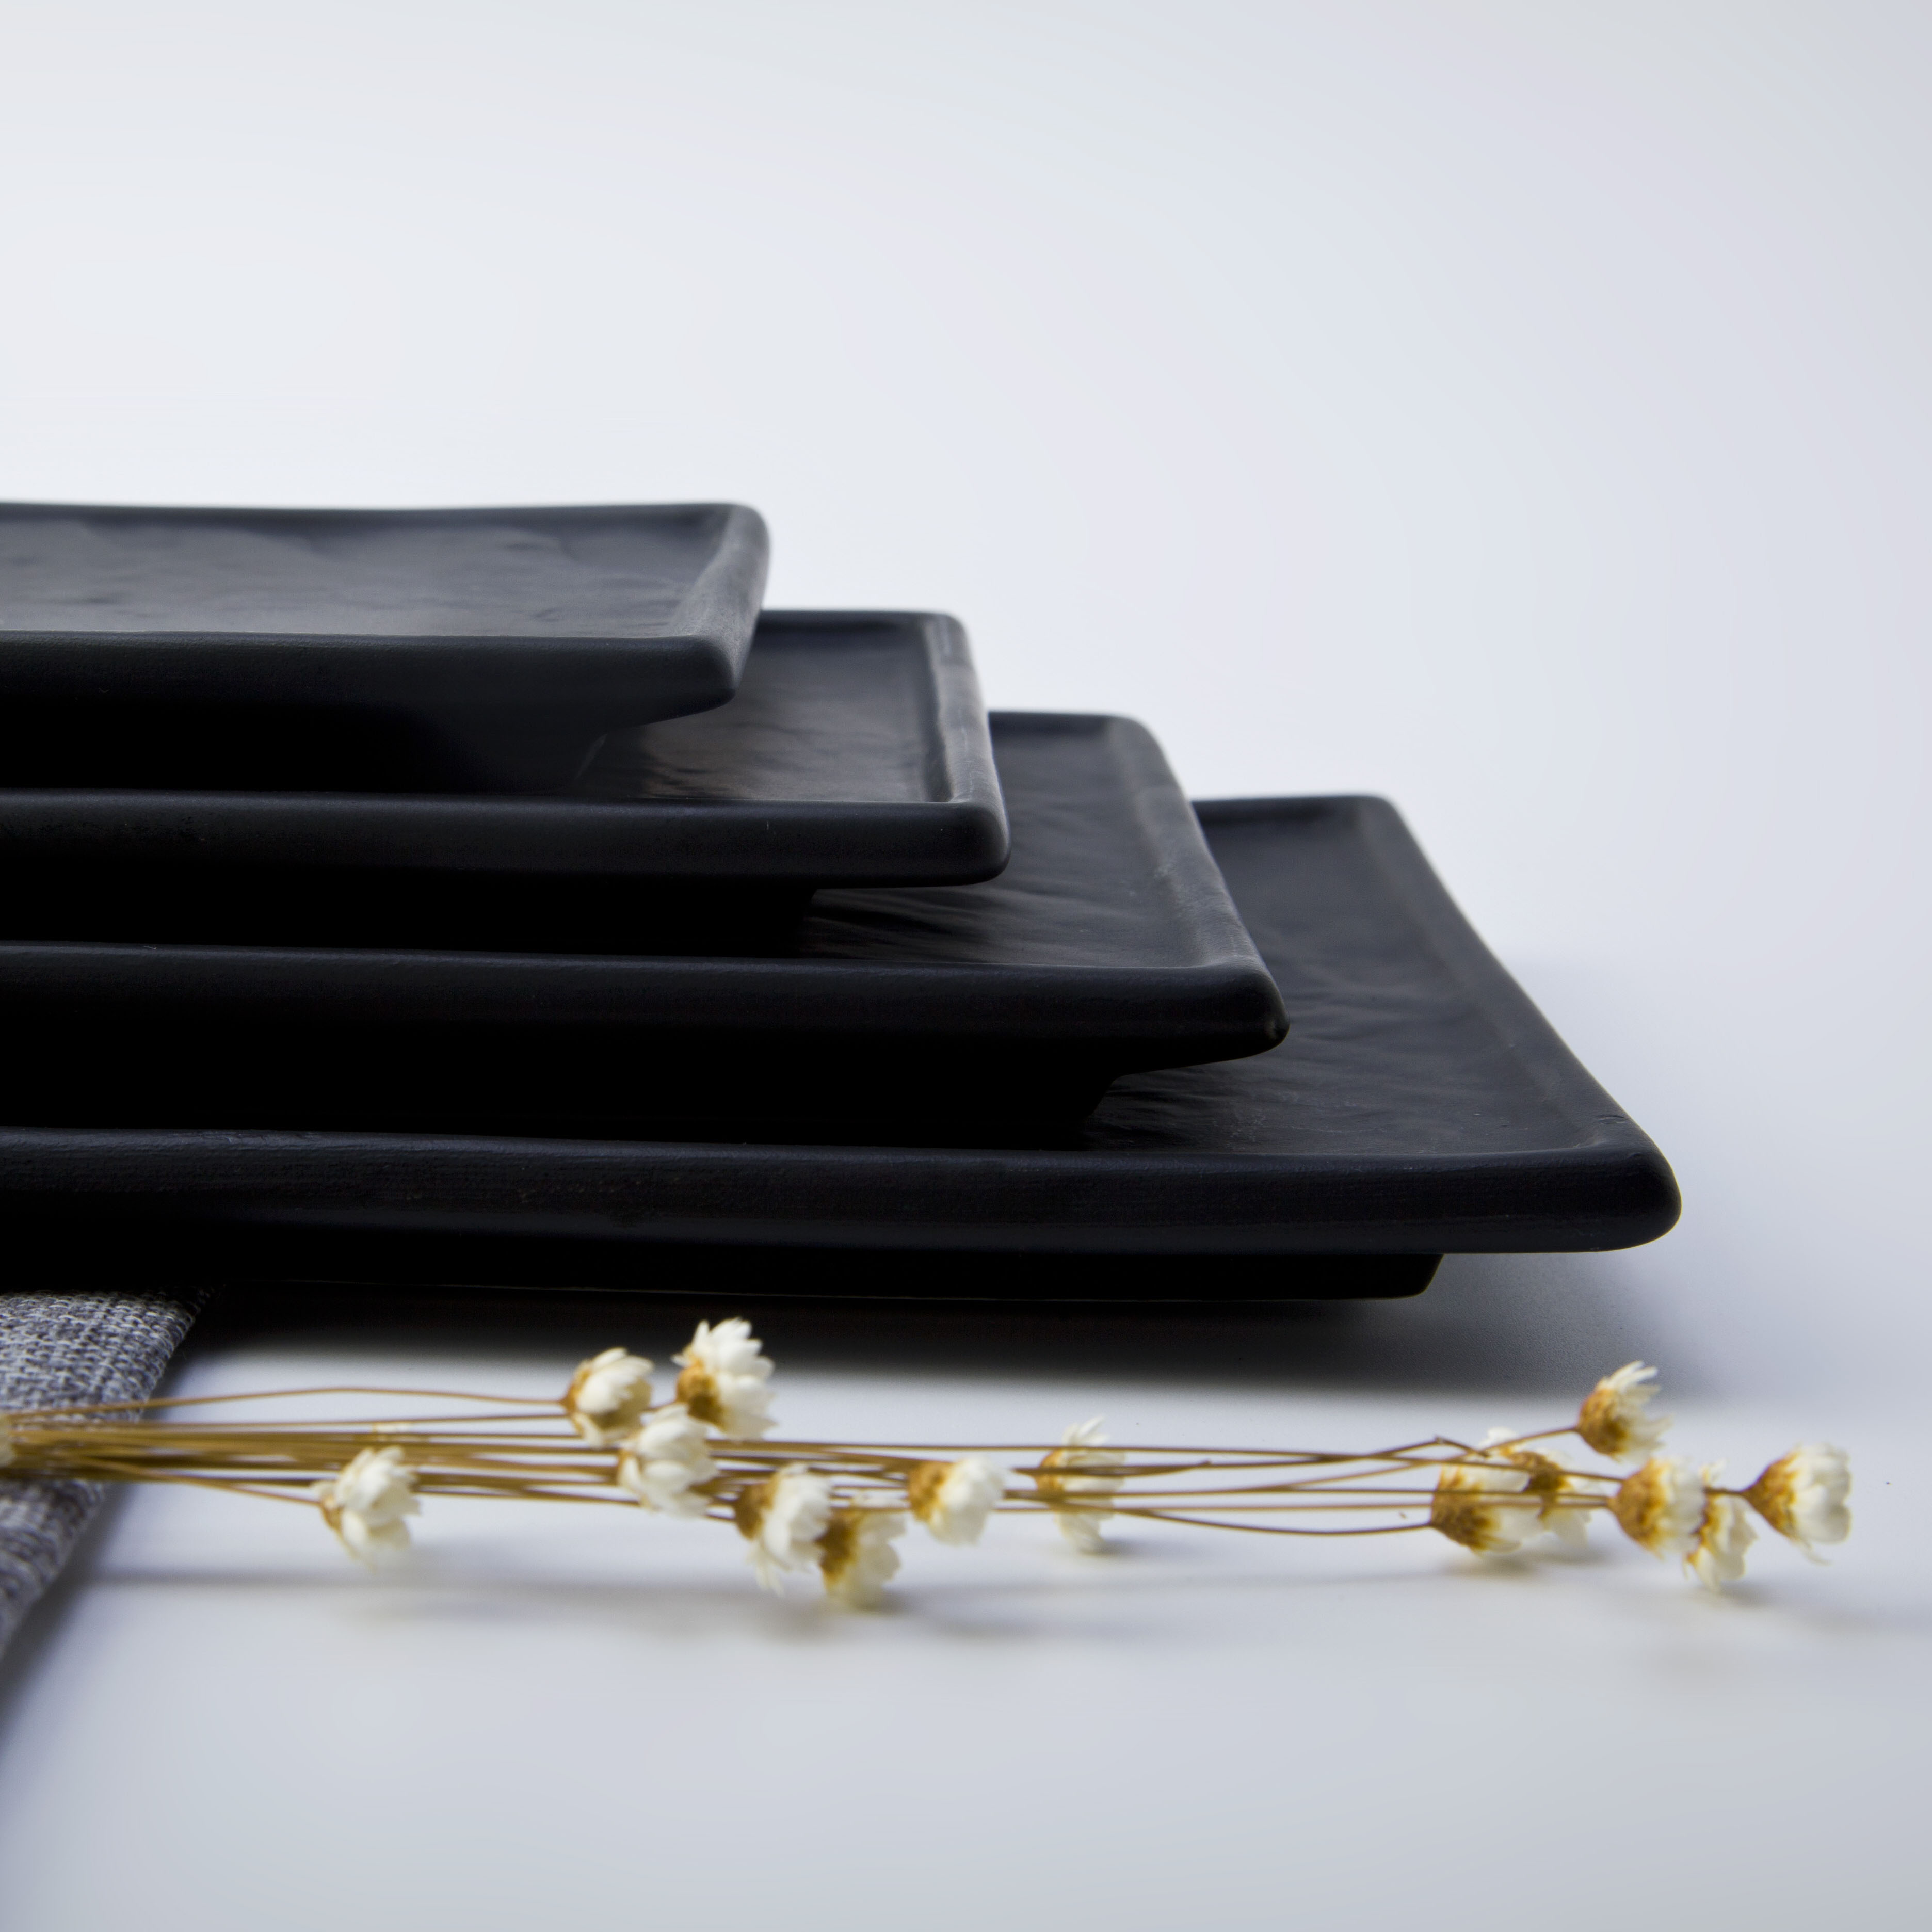 Sushi Restaurant Plato Rectangular, Australian Japanese Dinnerware Sets Black, Hotel Sushi SetRectangle Ceramic Plate